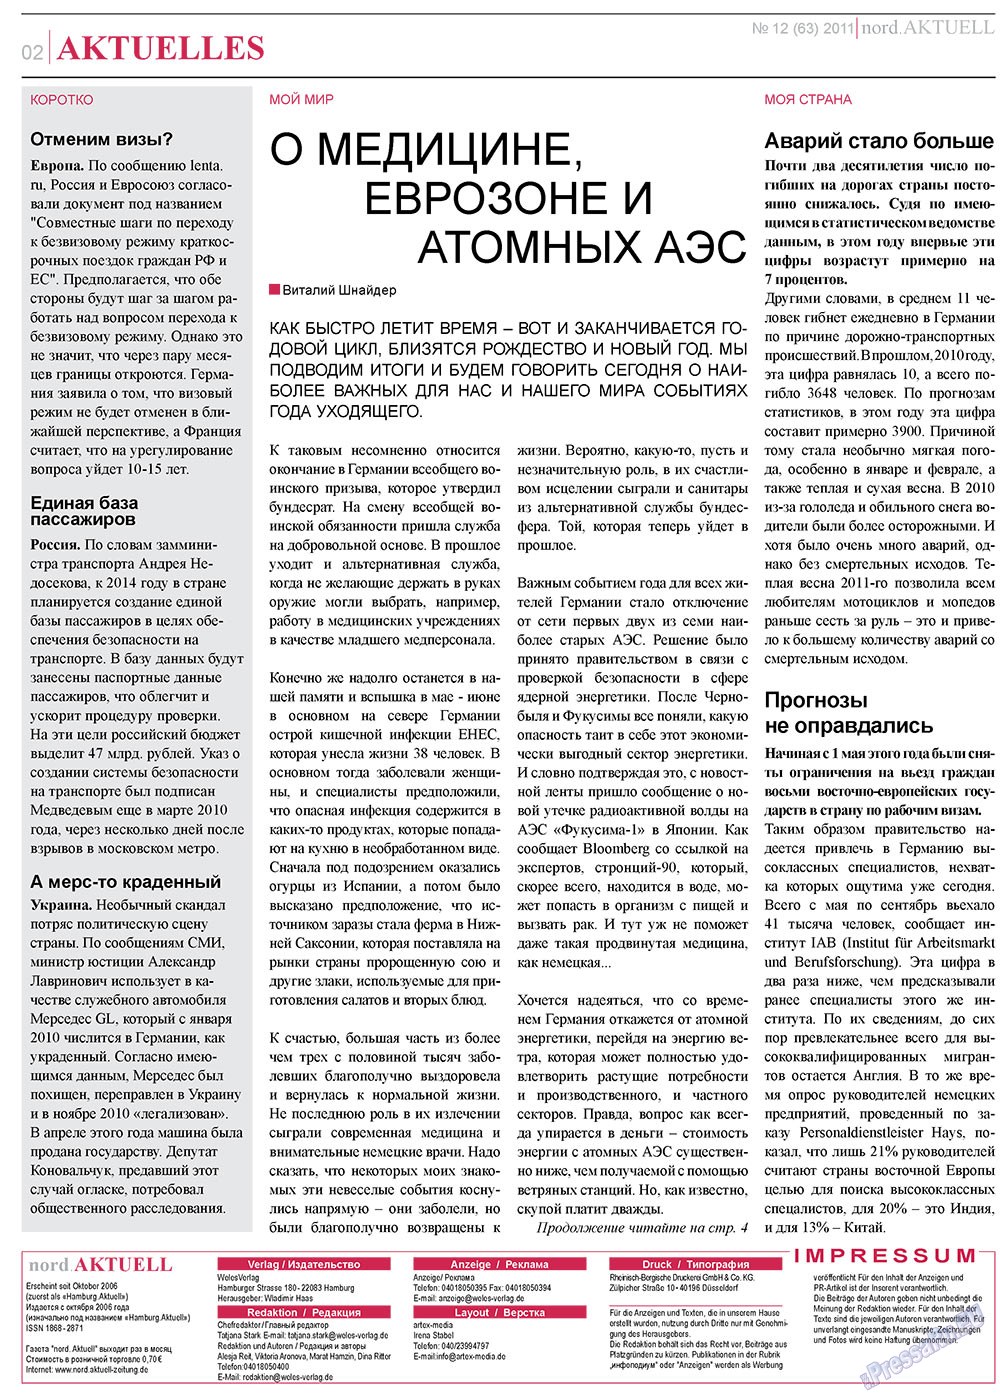 nord.Aktuell, газета. 2011 №12 стр.2